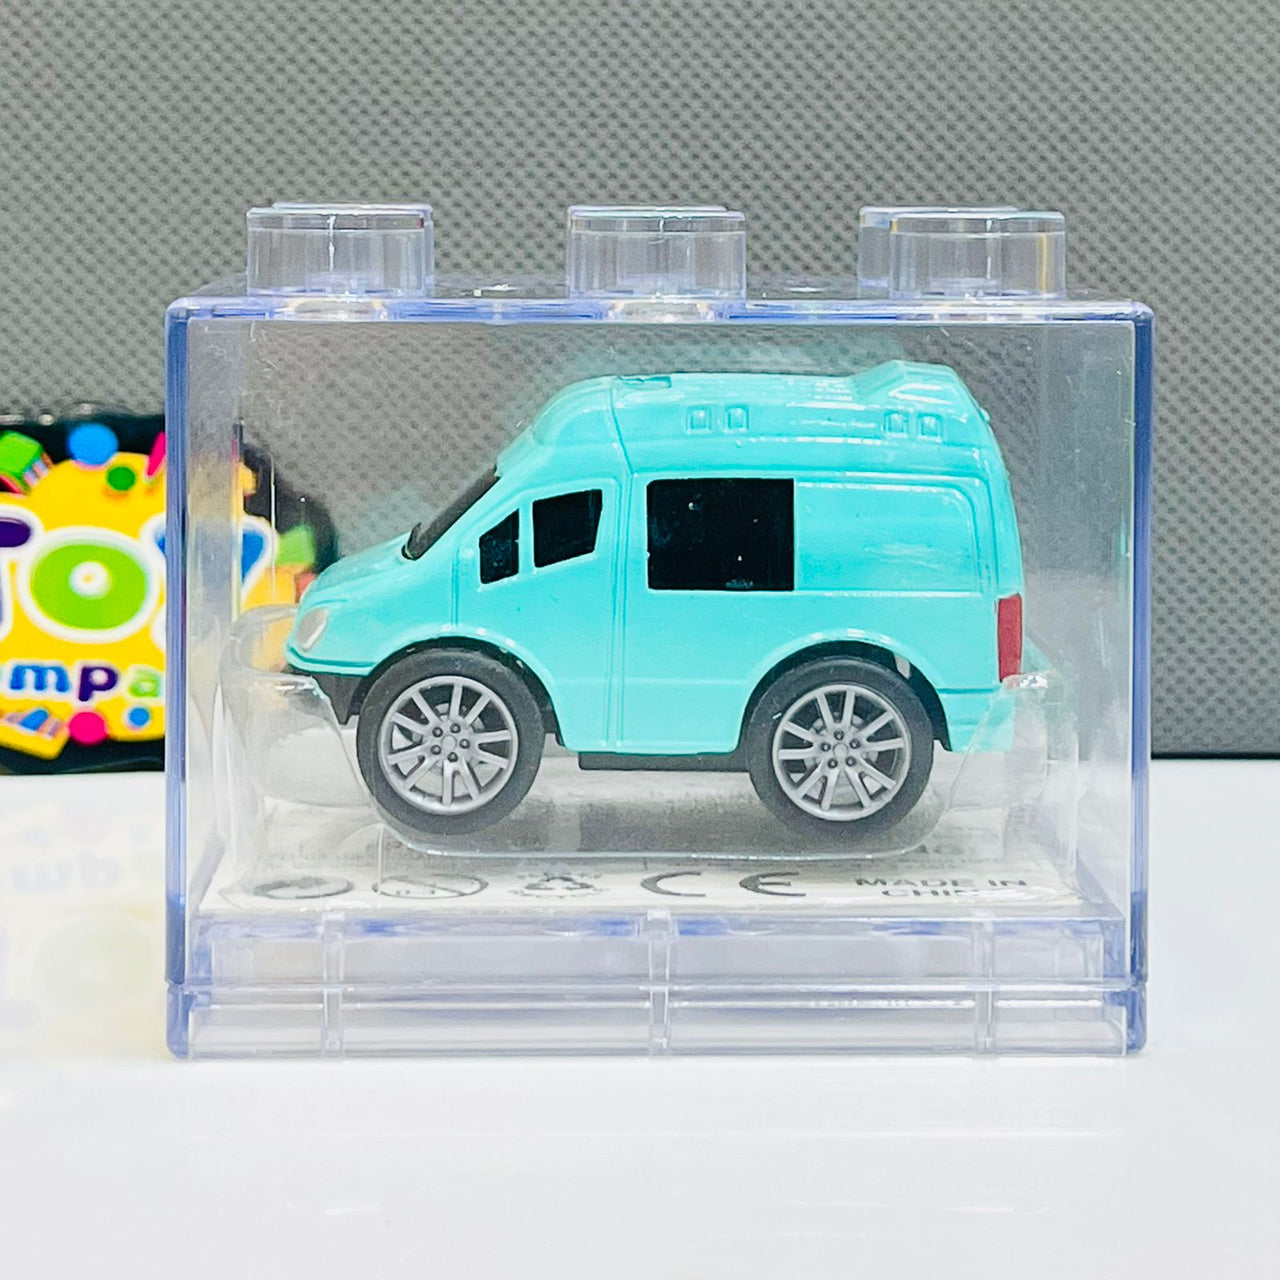 1Pc Diecast Van With Acrylic Display Box-Assortment